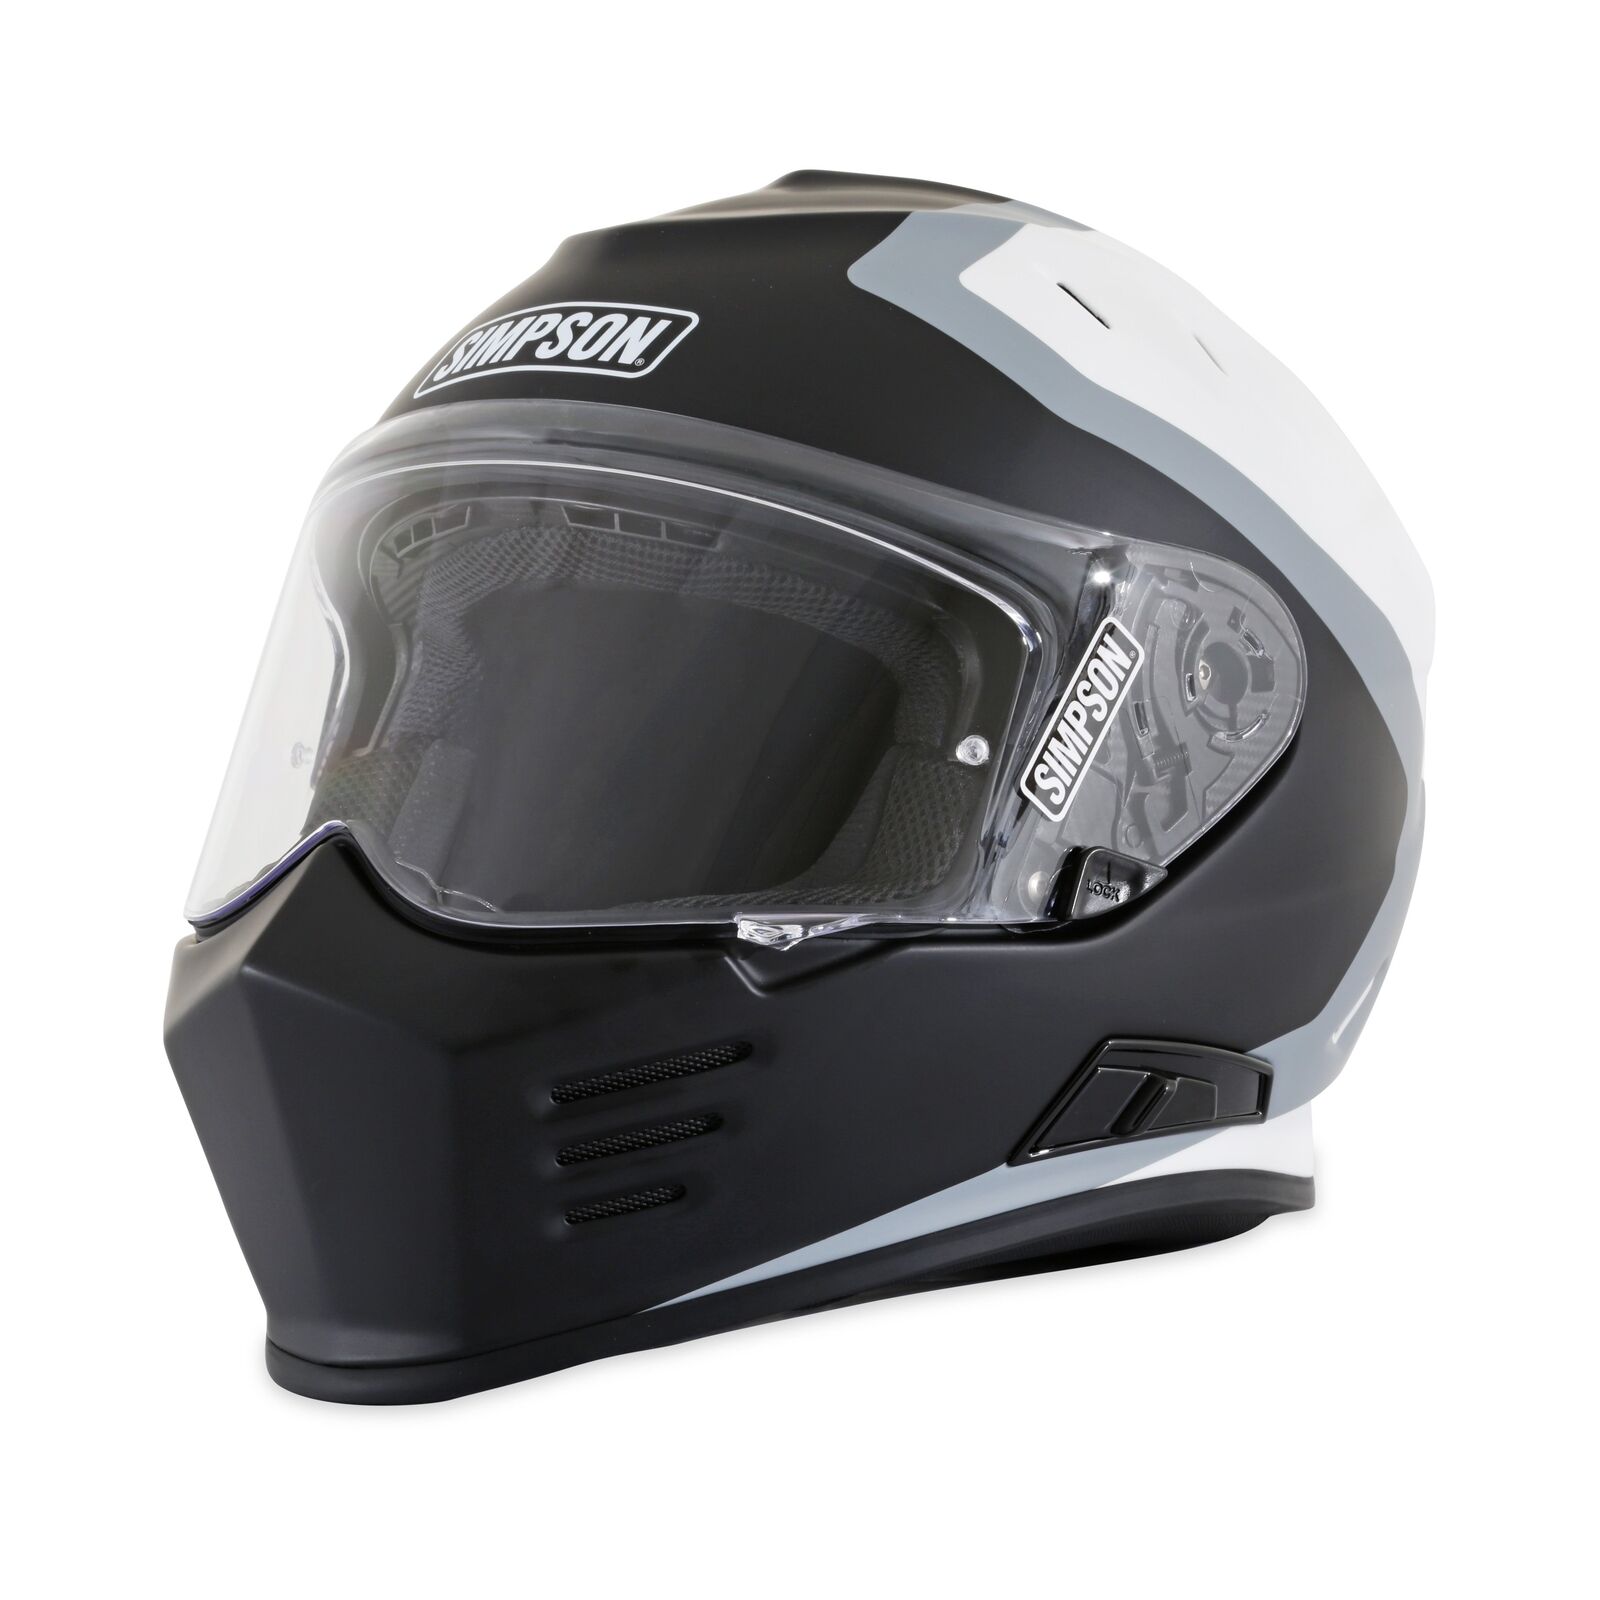 Simpson Racing GBDMWRA Ghost Bandit Motorcycle Helmet - Adult Medium - Wraith